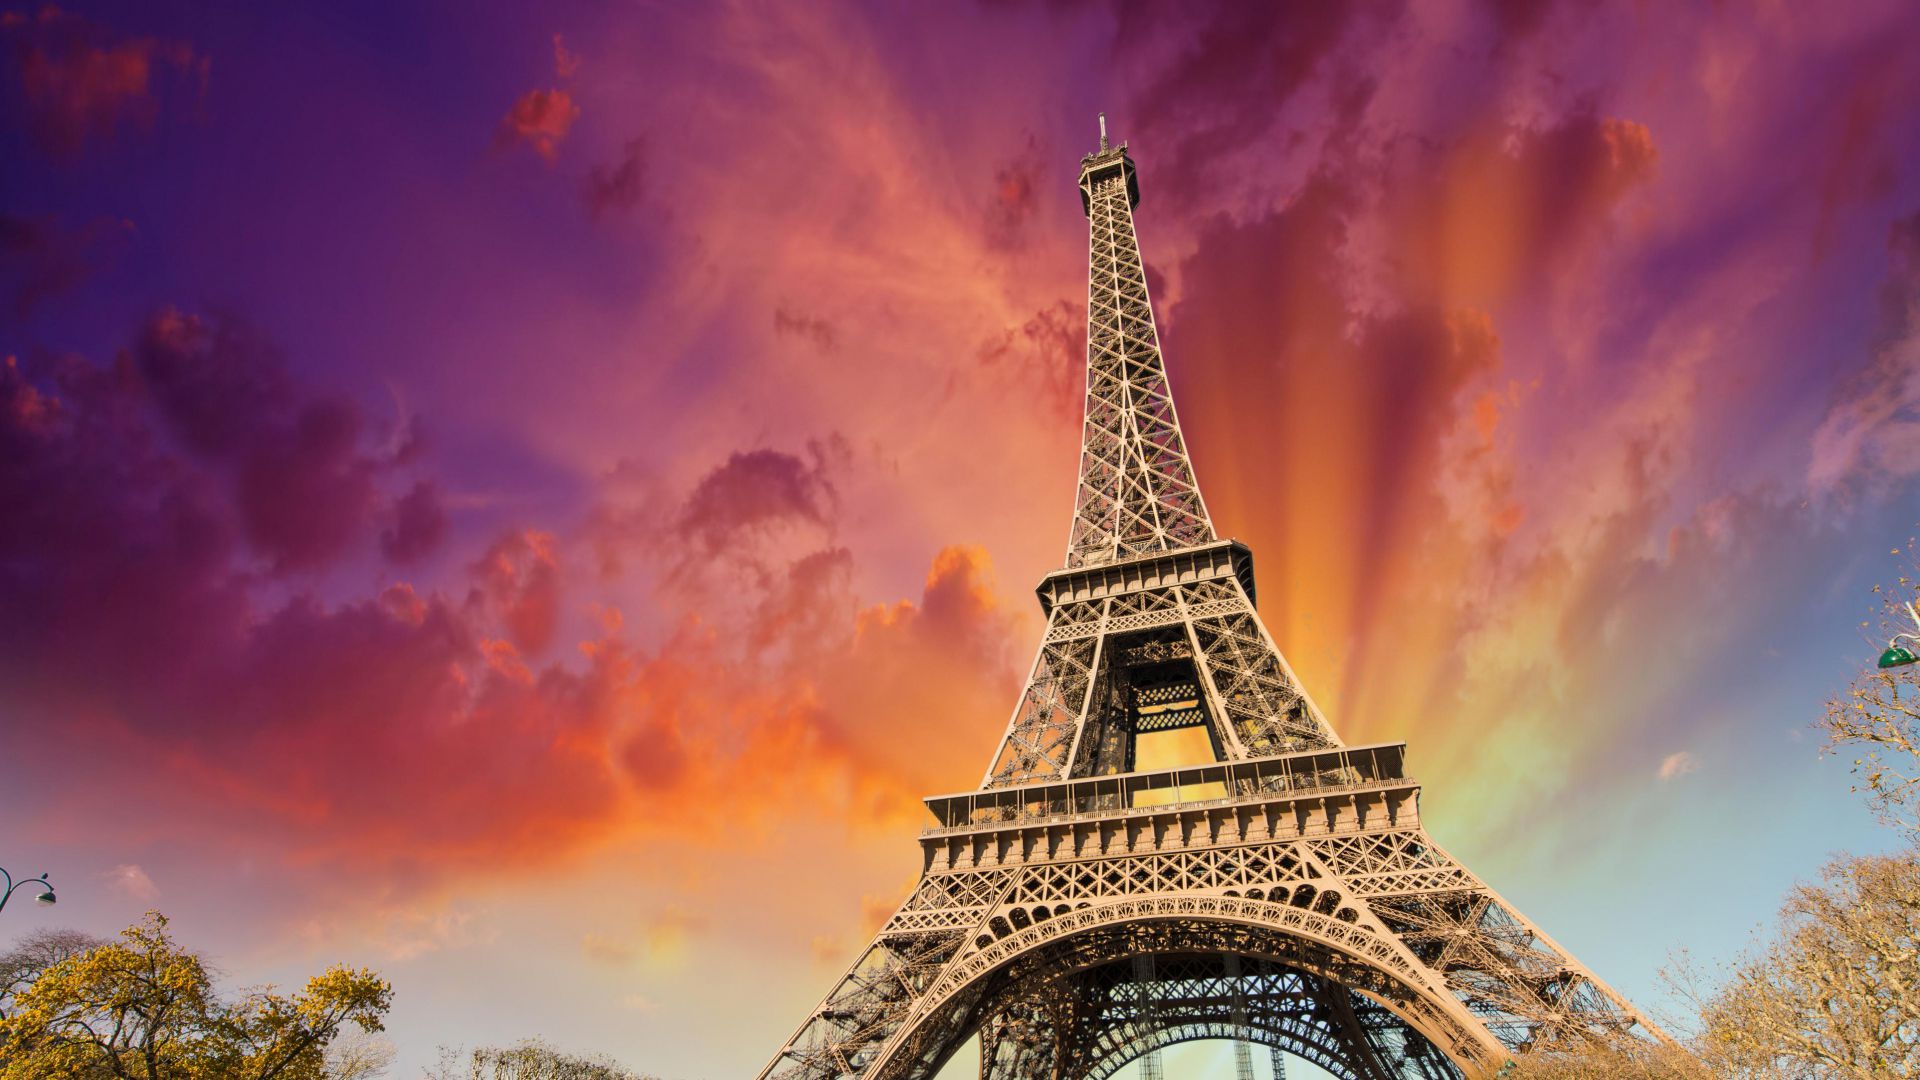 Эйфелева башня, Париж, Франция, Туризм, Путешествие, Eiffel Tower, Paris, France, Tourism, Travel (horizontal)